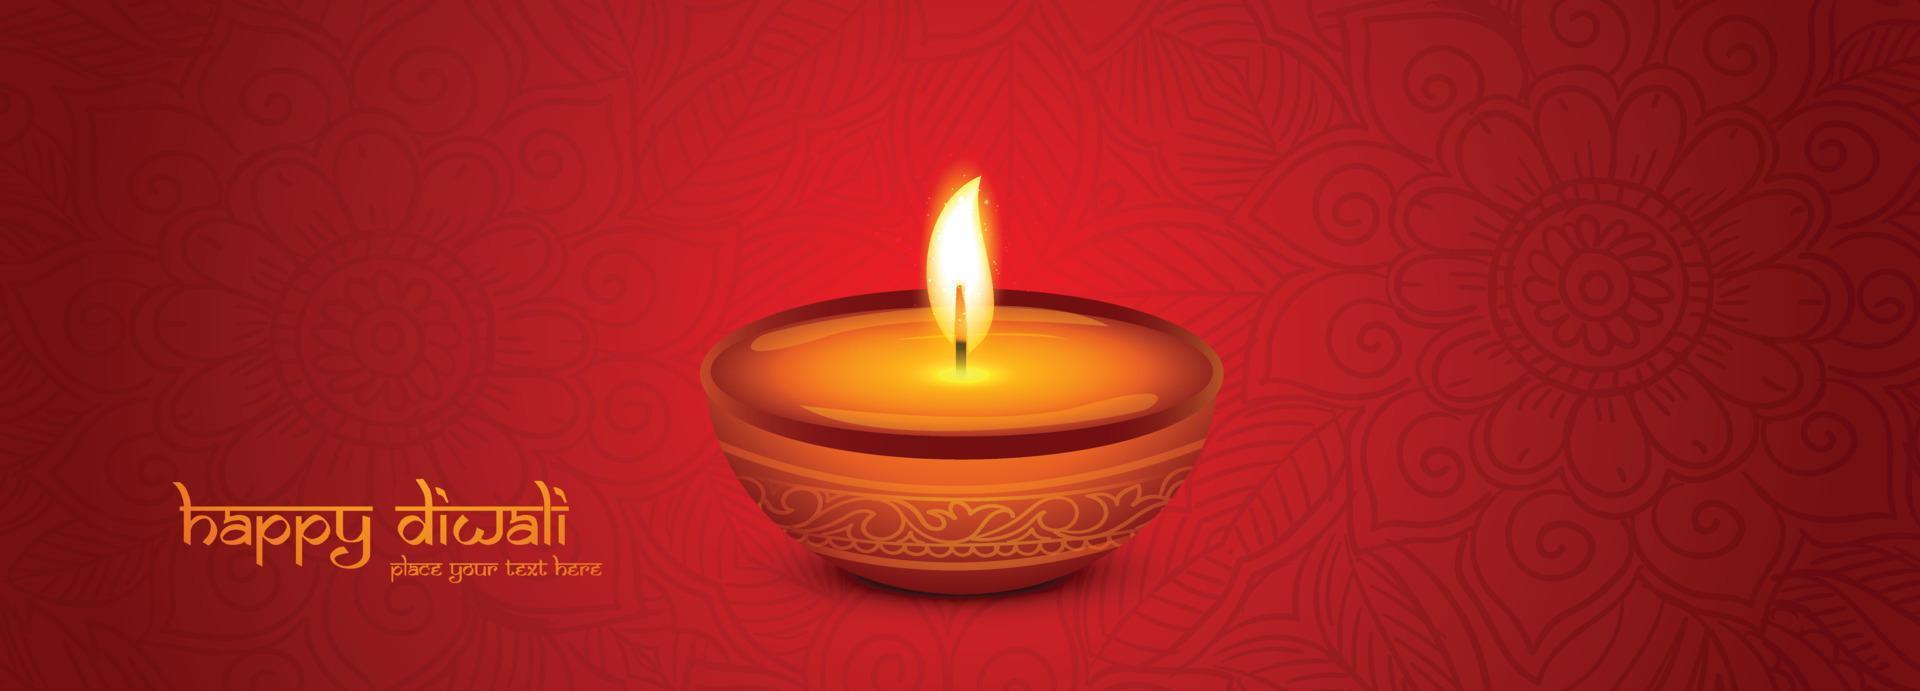 gelukkig diwali festival van licht met olie lamp viering banier achtergrond vector